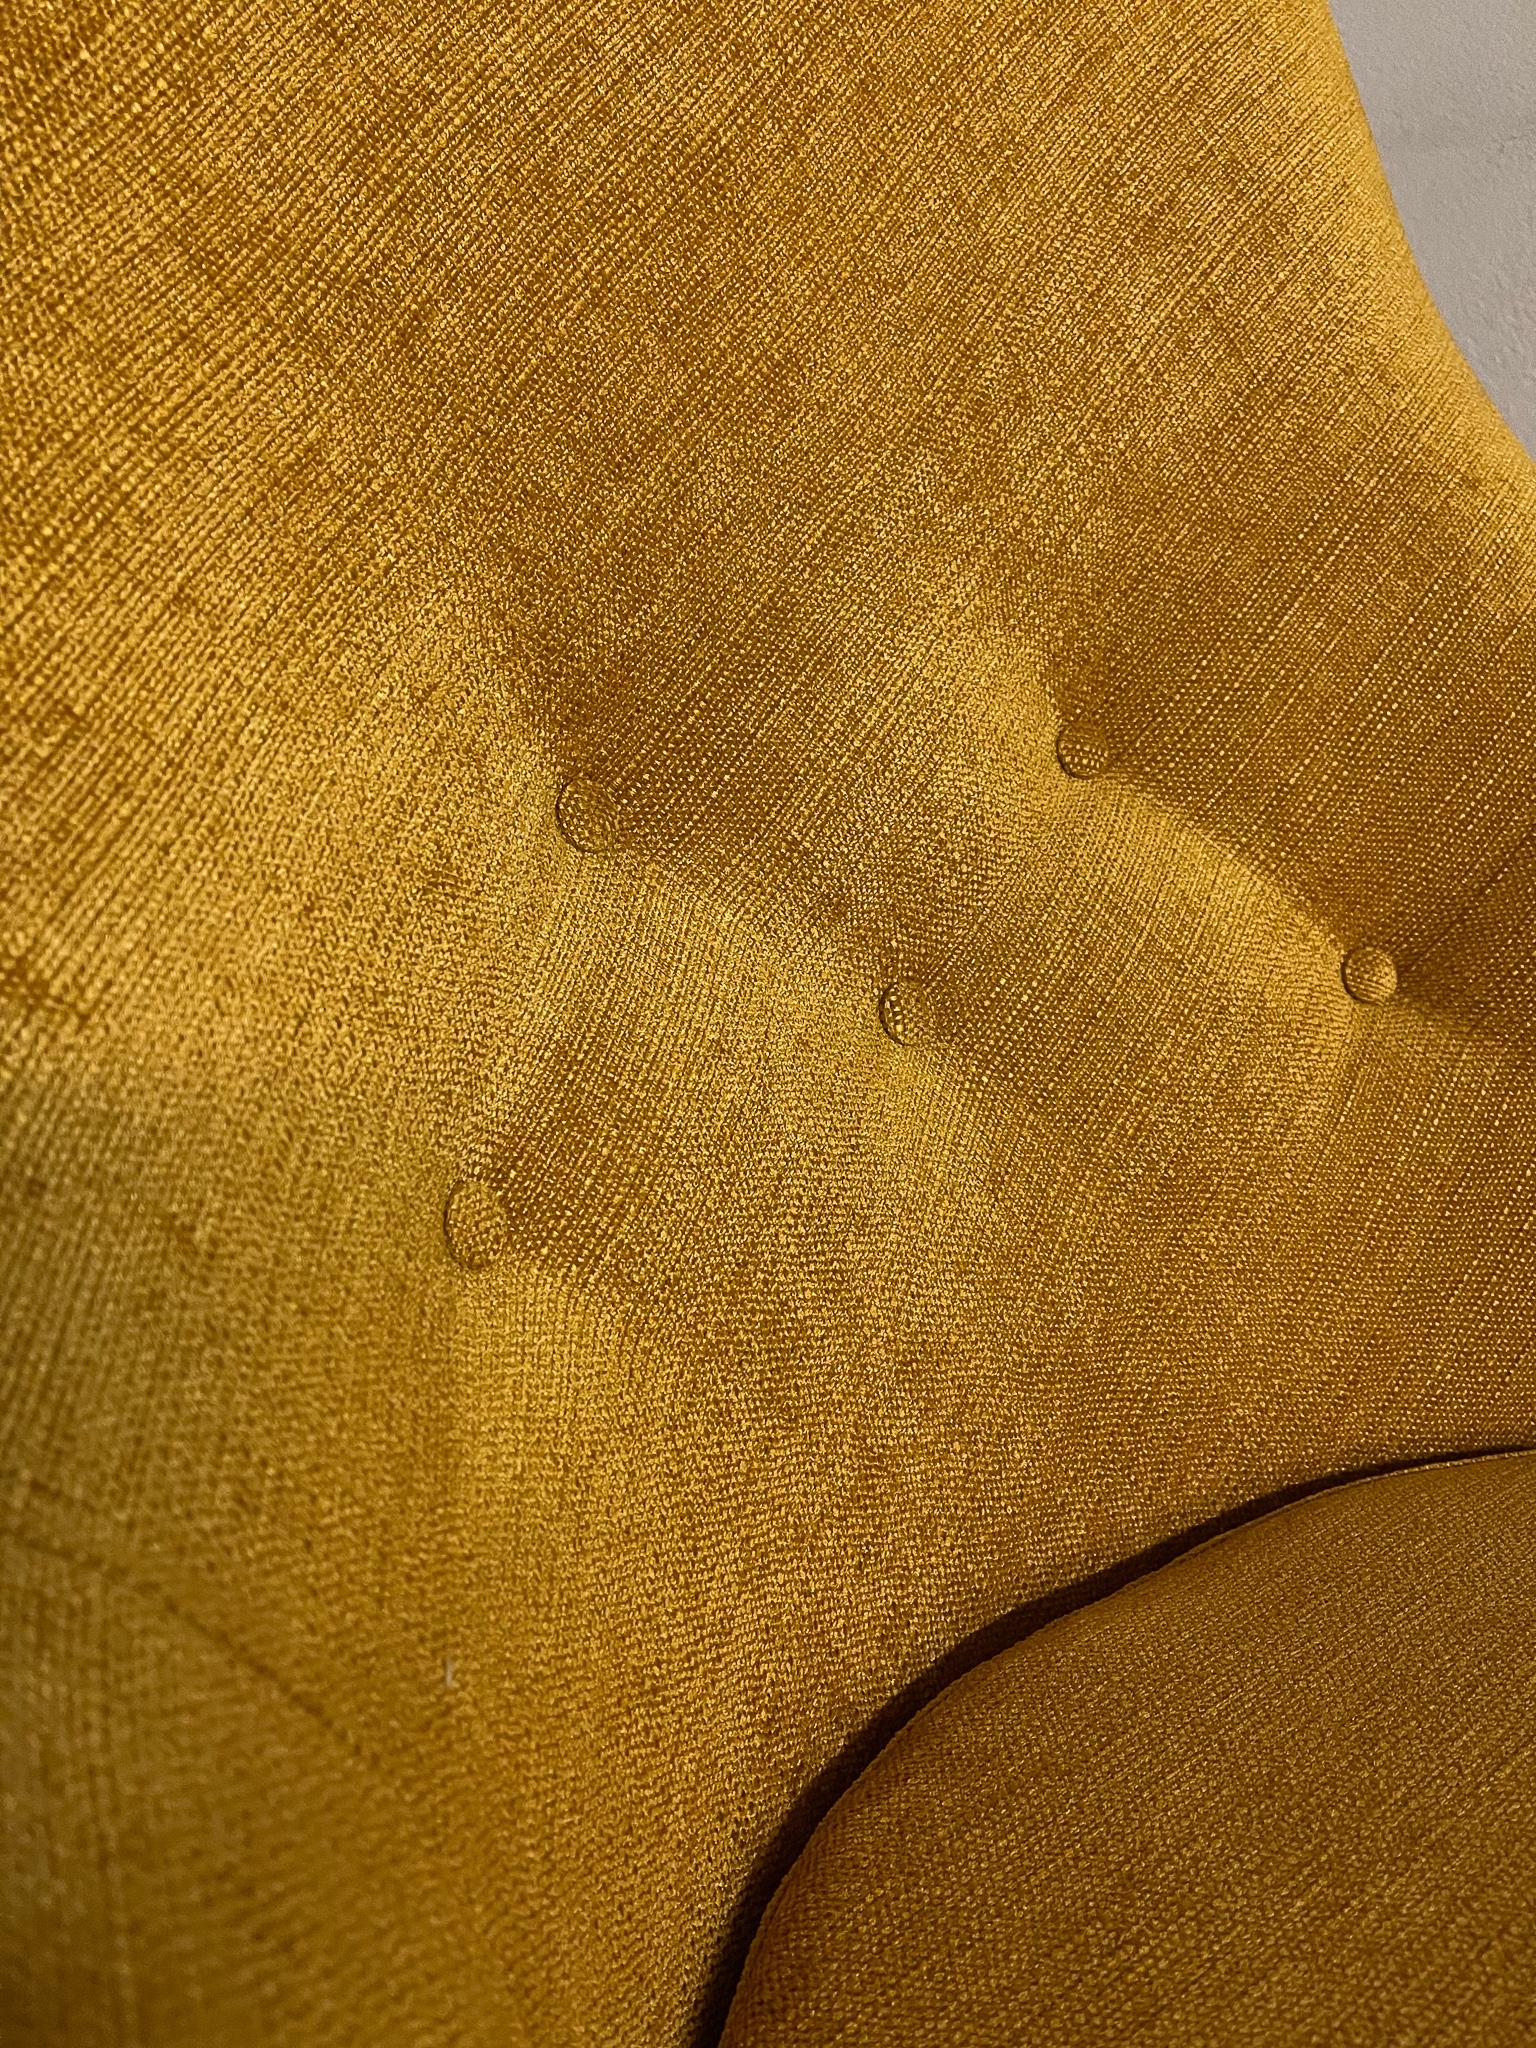 Midcentury Mustard Colored Lounge Chair S.M. Wincrantz, Sweden 2